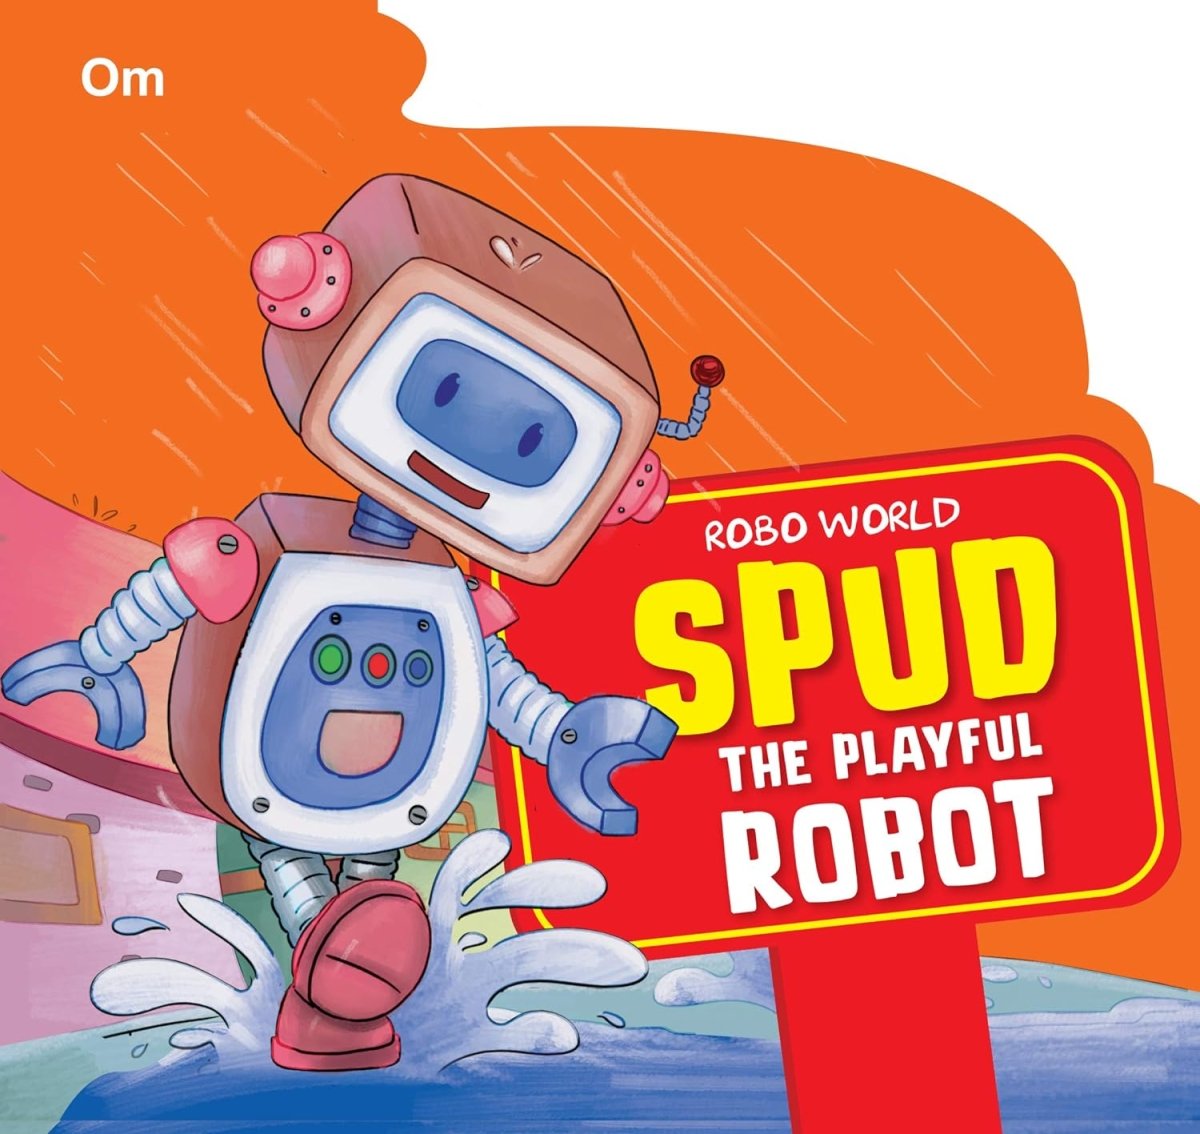 Om Books International Robo World- Spud The Playful Robot- Cutout Board Books - 9789352764402